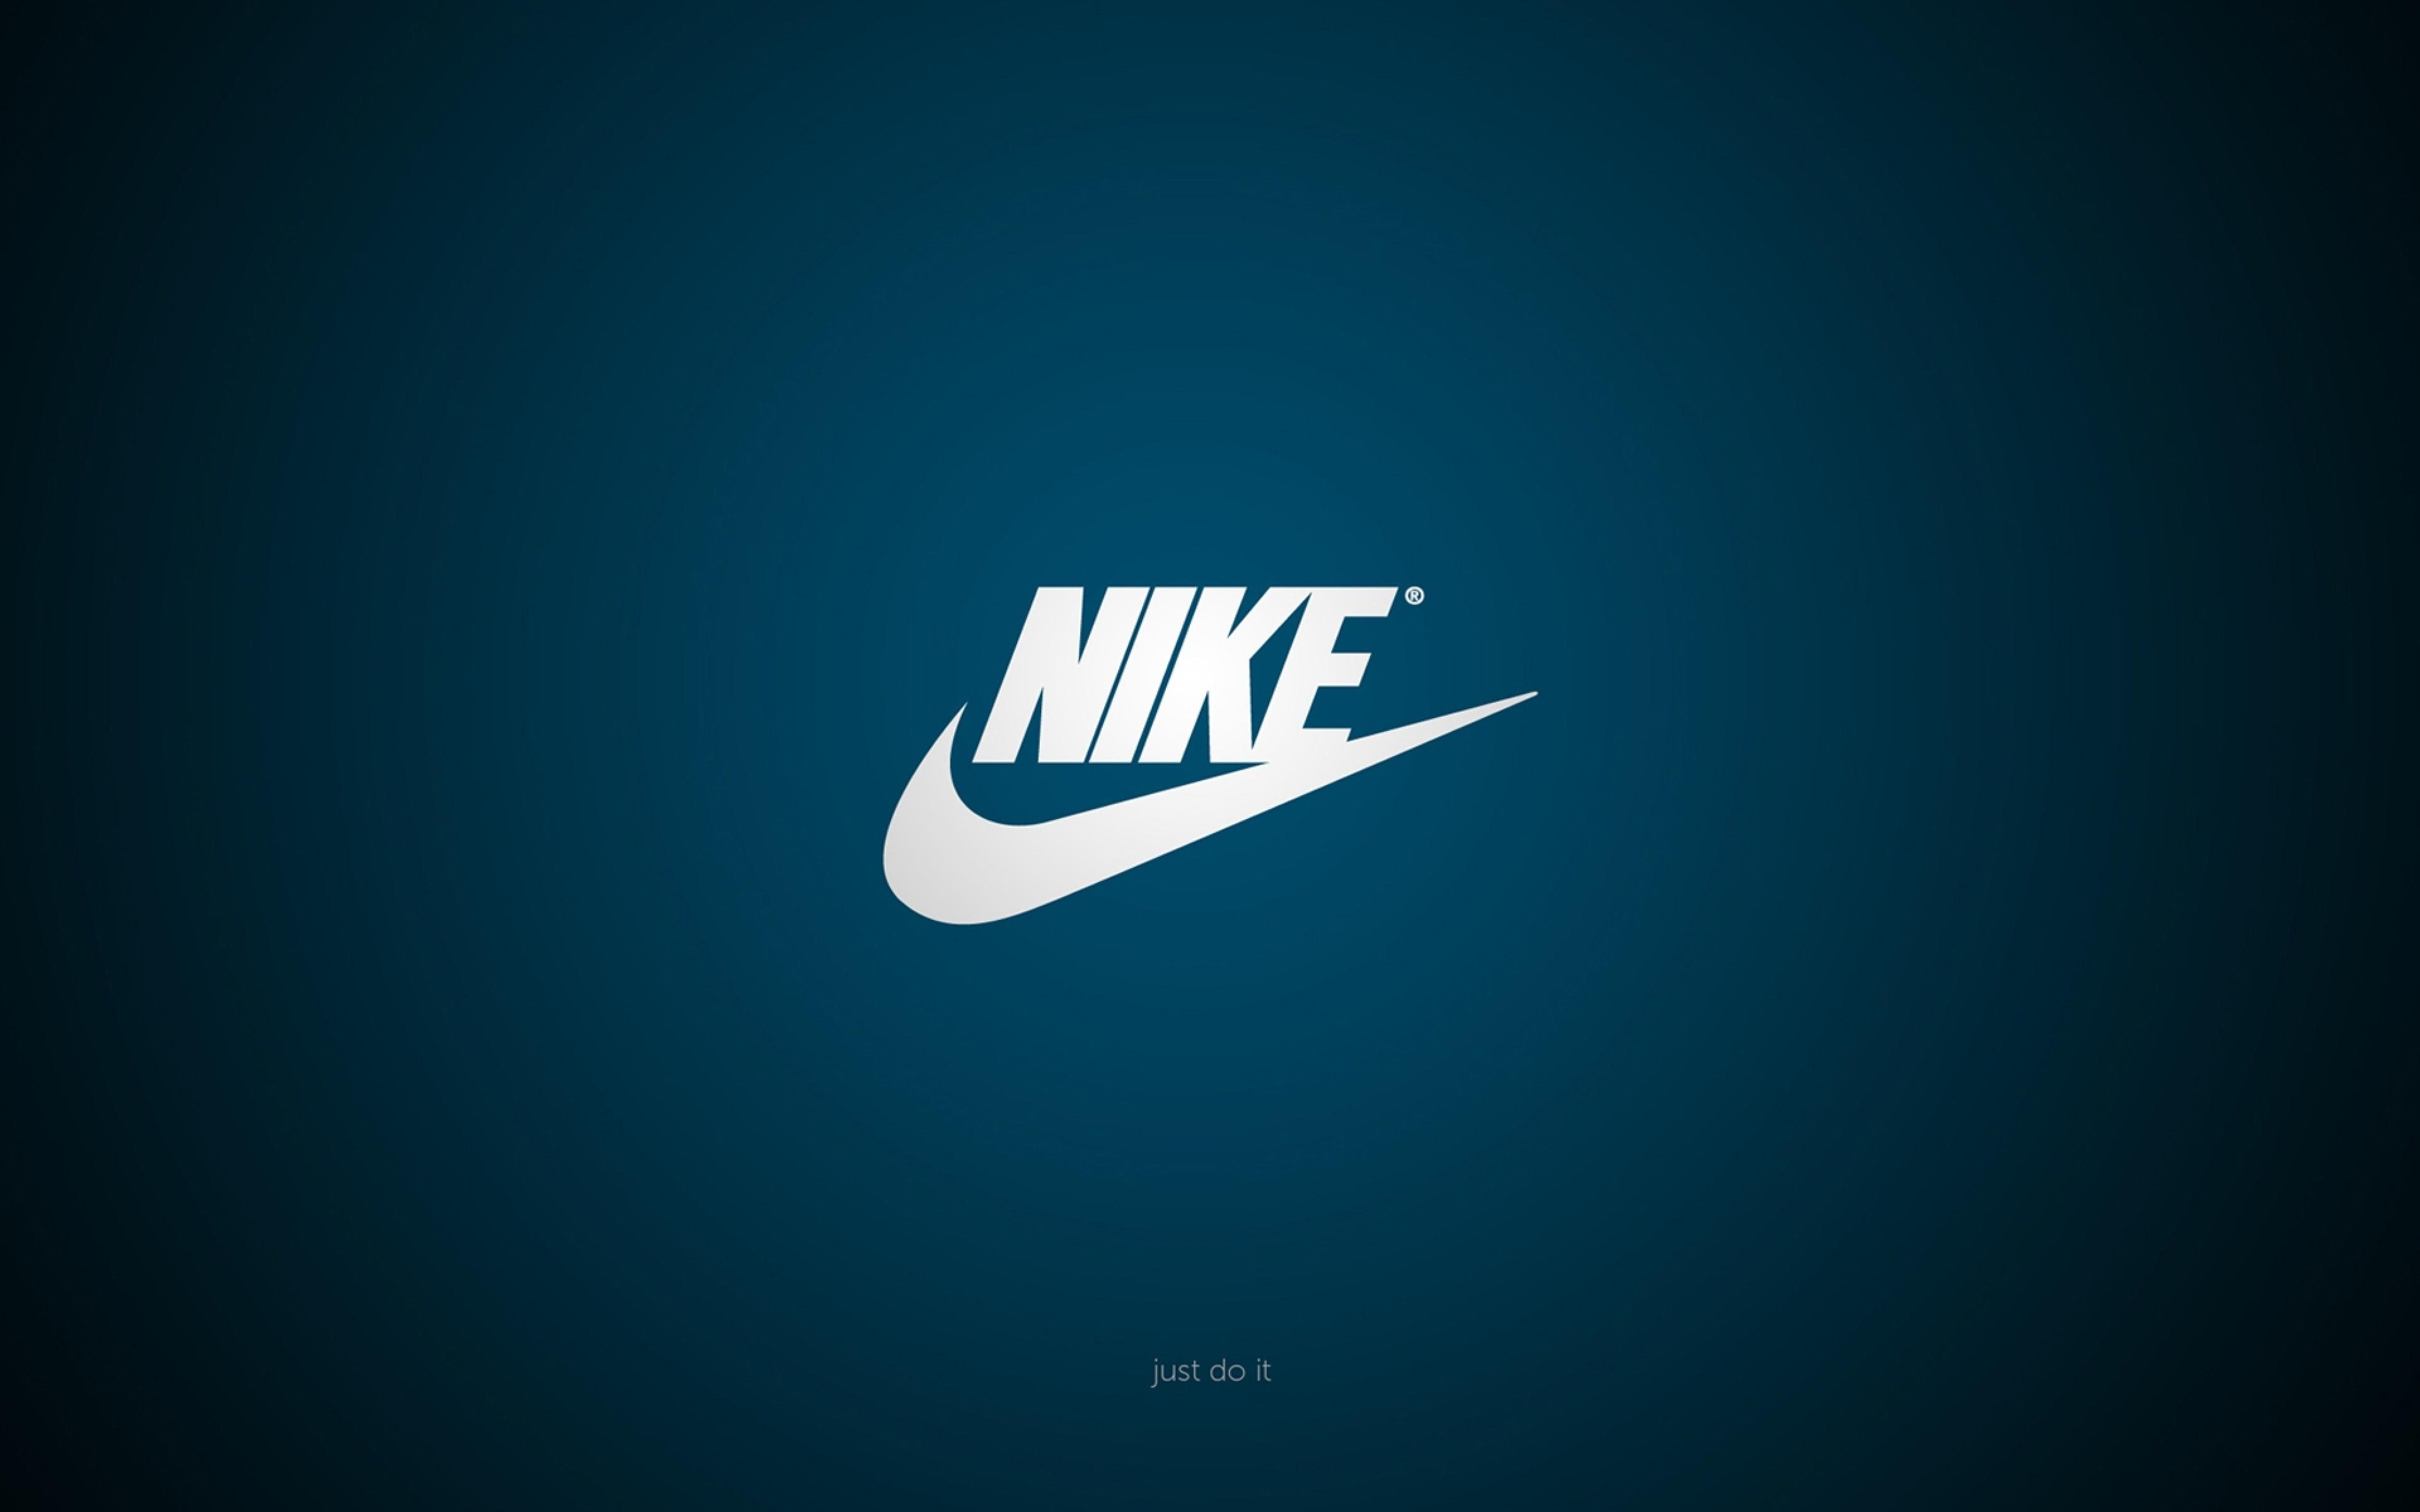 Download HD Nike Wallpaper Logo With Minimalism Slogan Just Do It